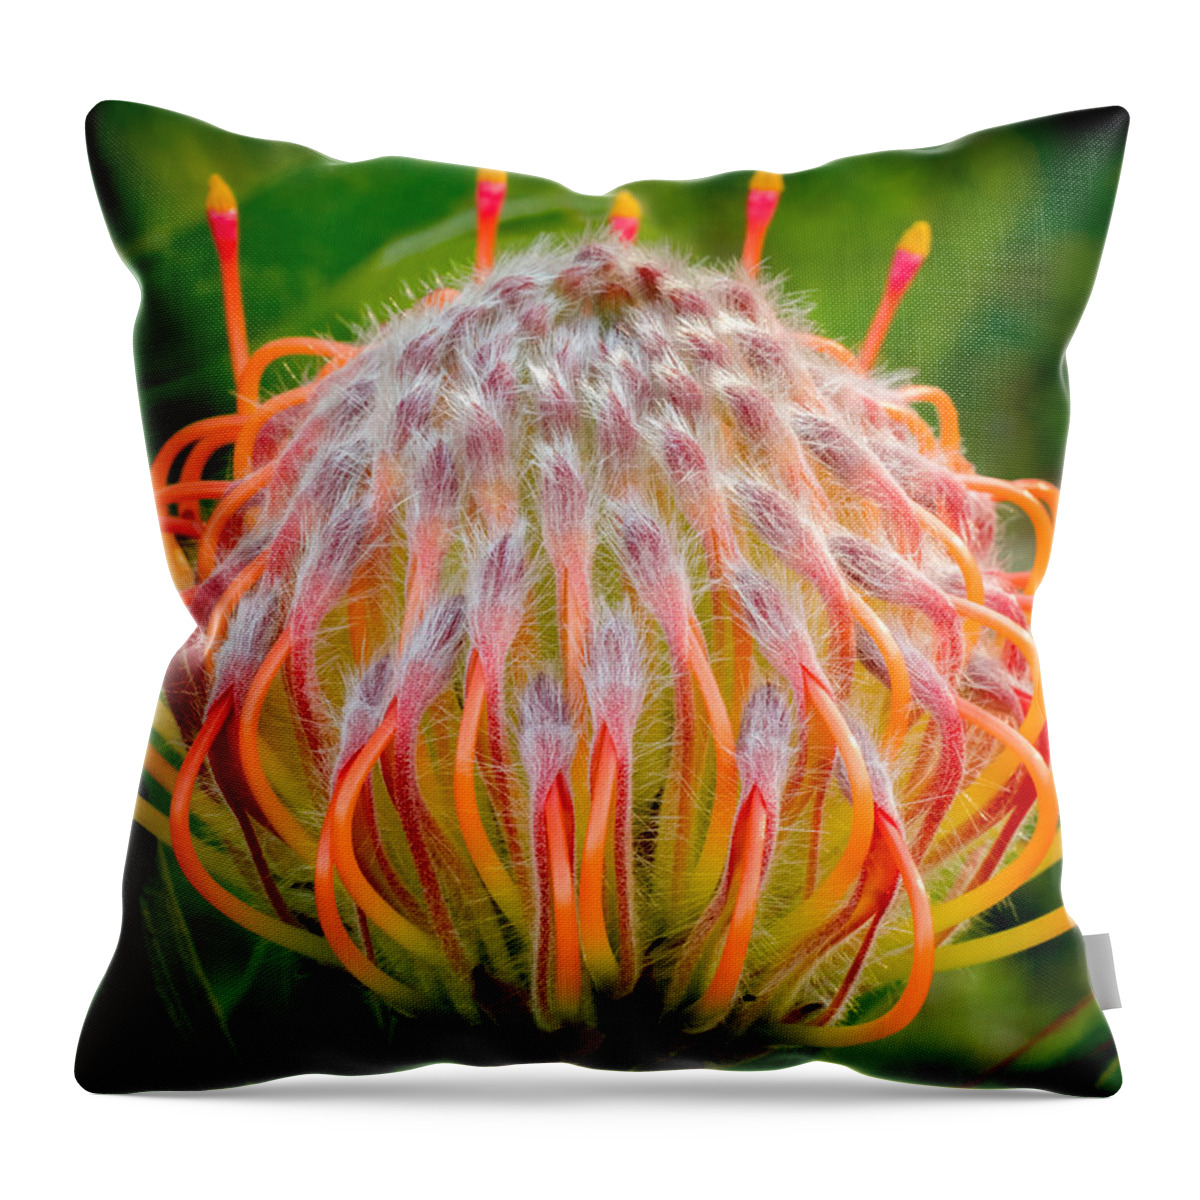 Flower Throw Pillow featuring the photograph Dance of the Hydra by Derek Dean